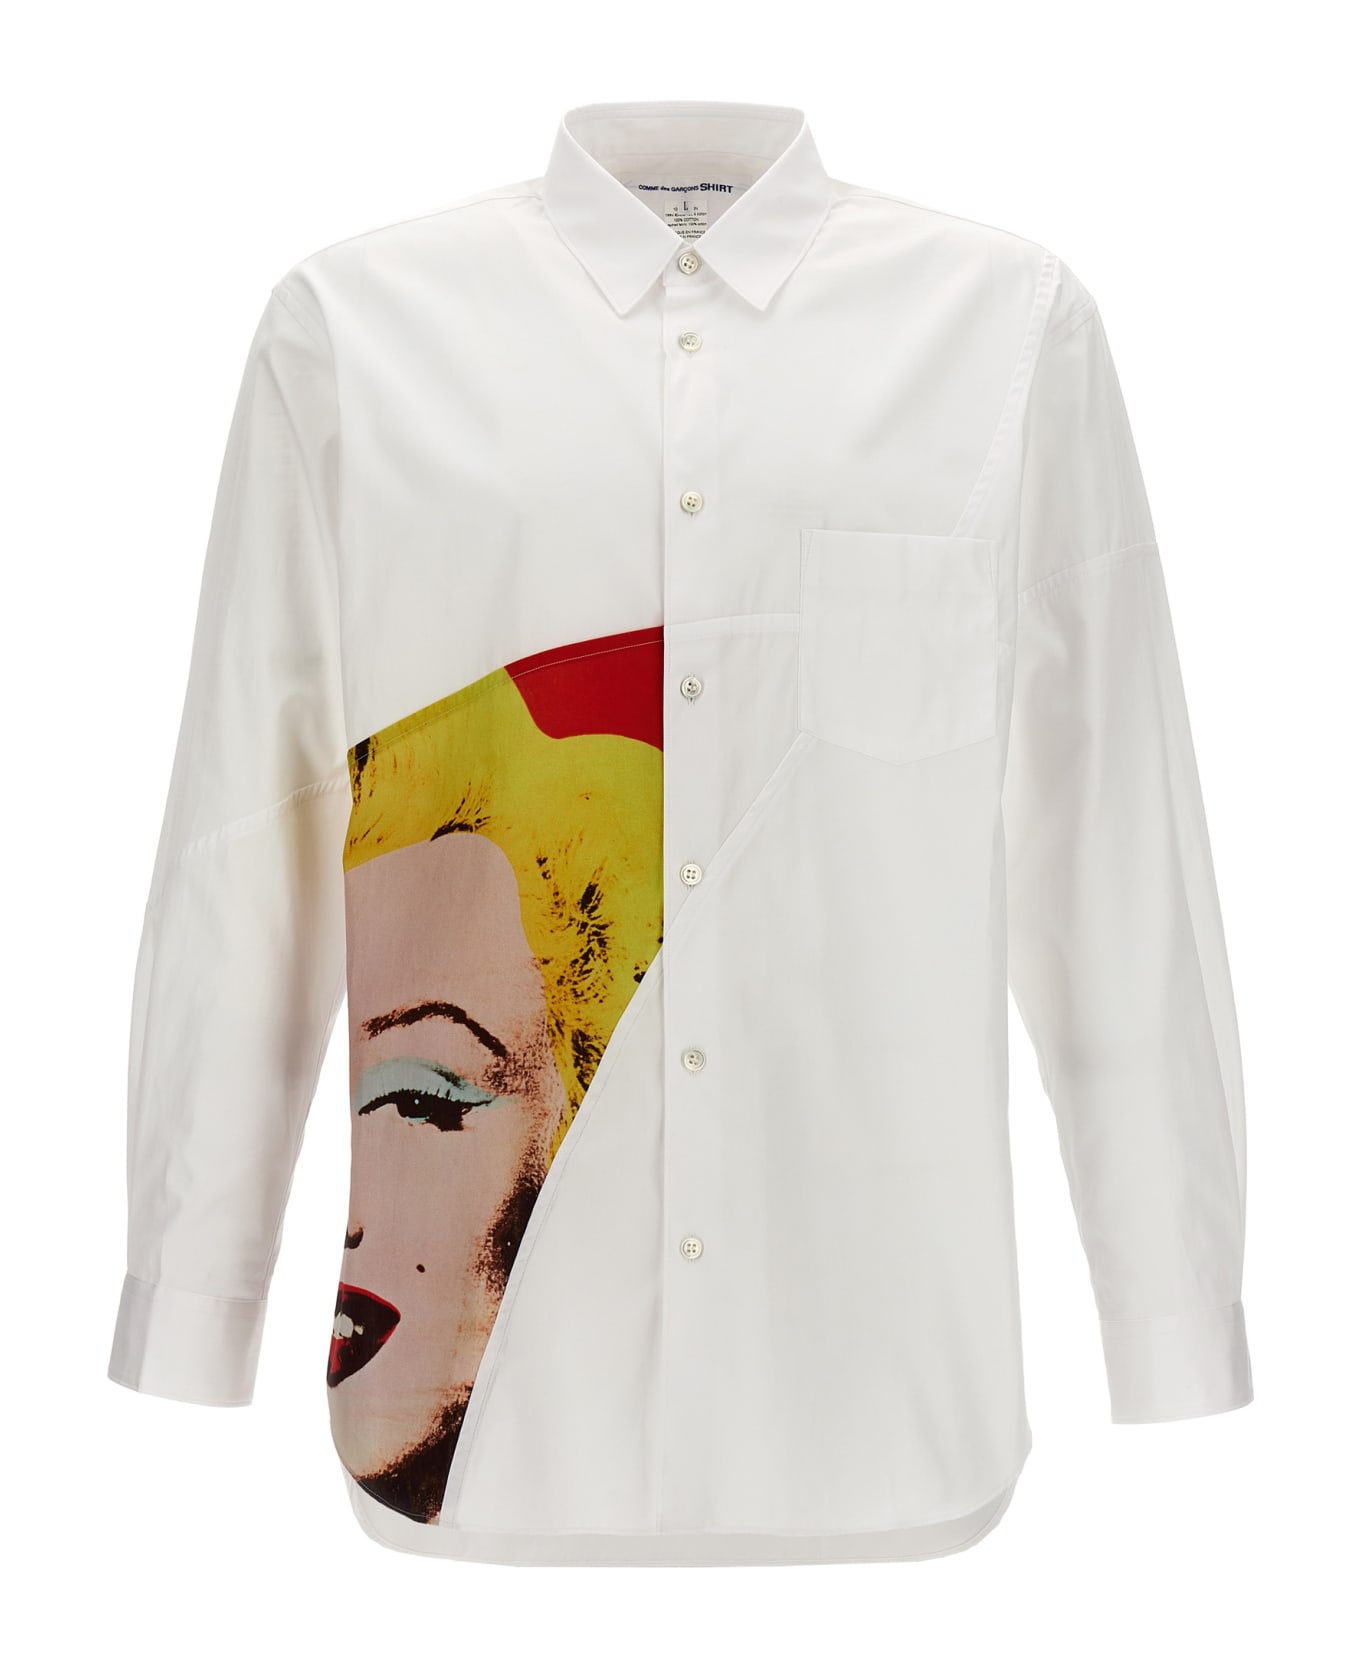 Comme des Garçons Shirt 'andy Warhol' Shirt - White